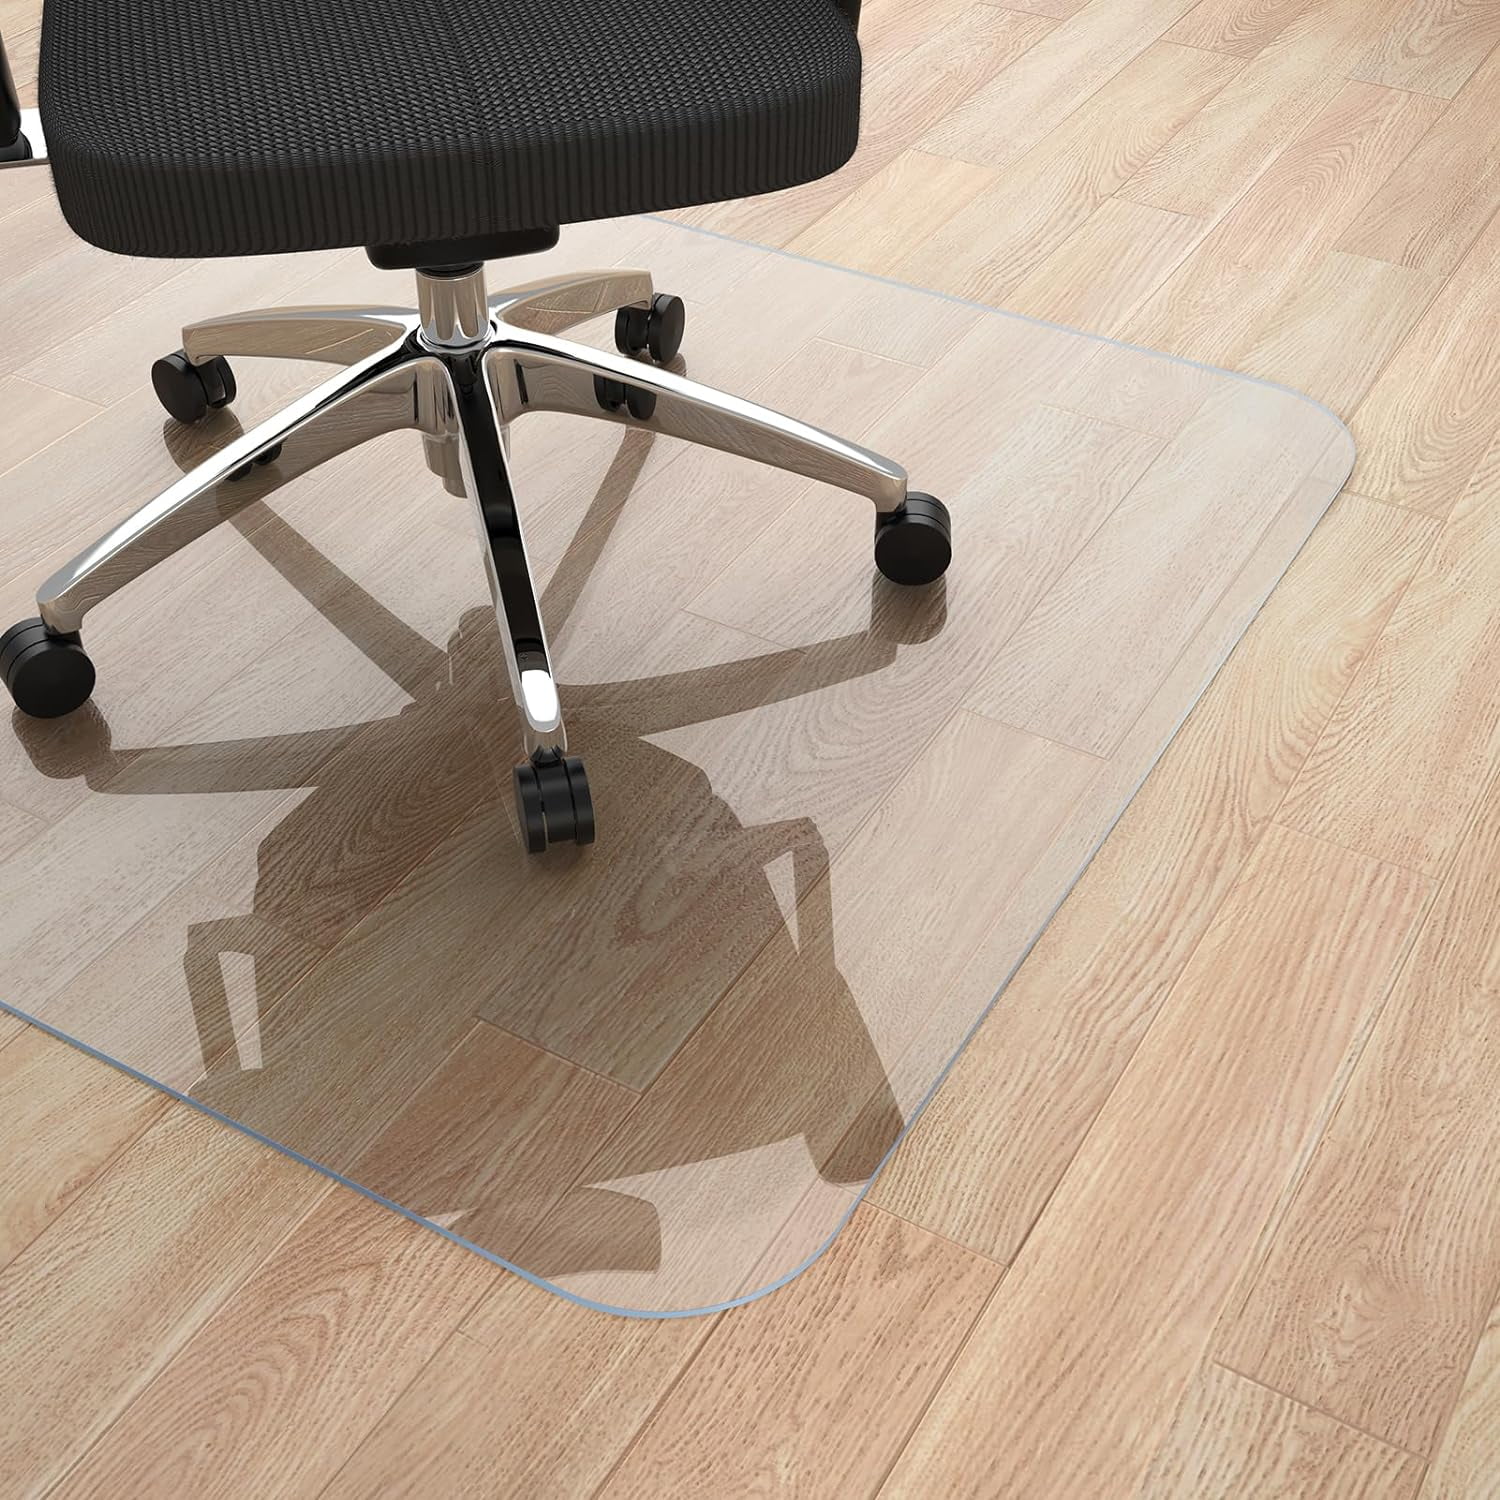 Gorilla Grip Office Chair Mat for Carpet Floor, Slip Resistant Heavy Duty  Under Desk Protector Carpeted Floors, No Divot Plastic Rolling Computer